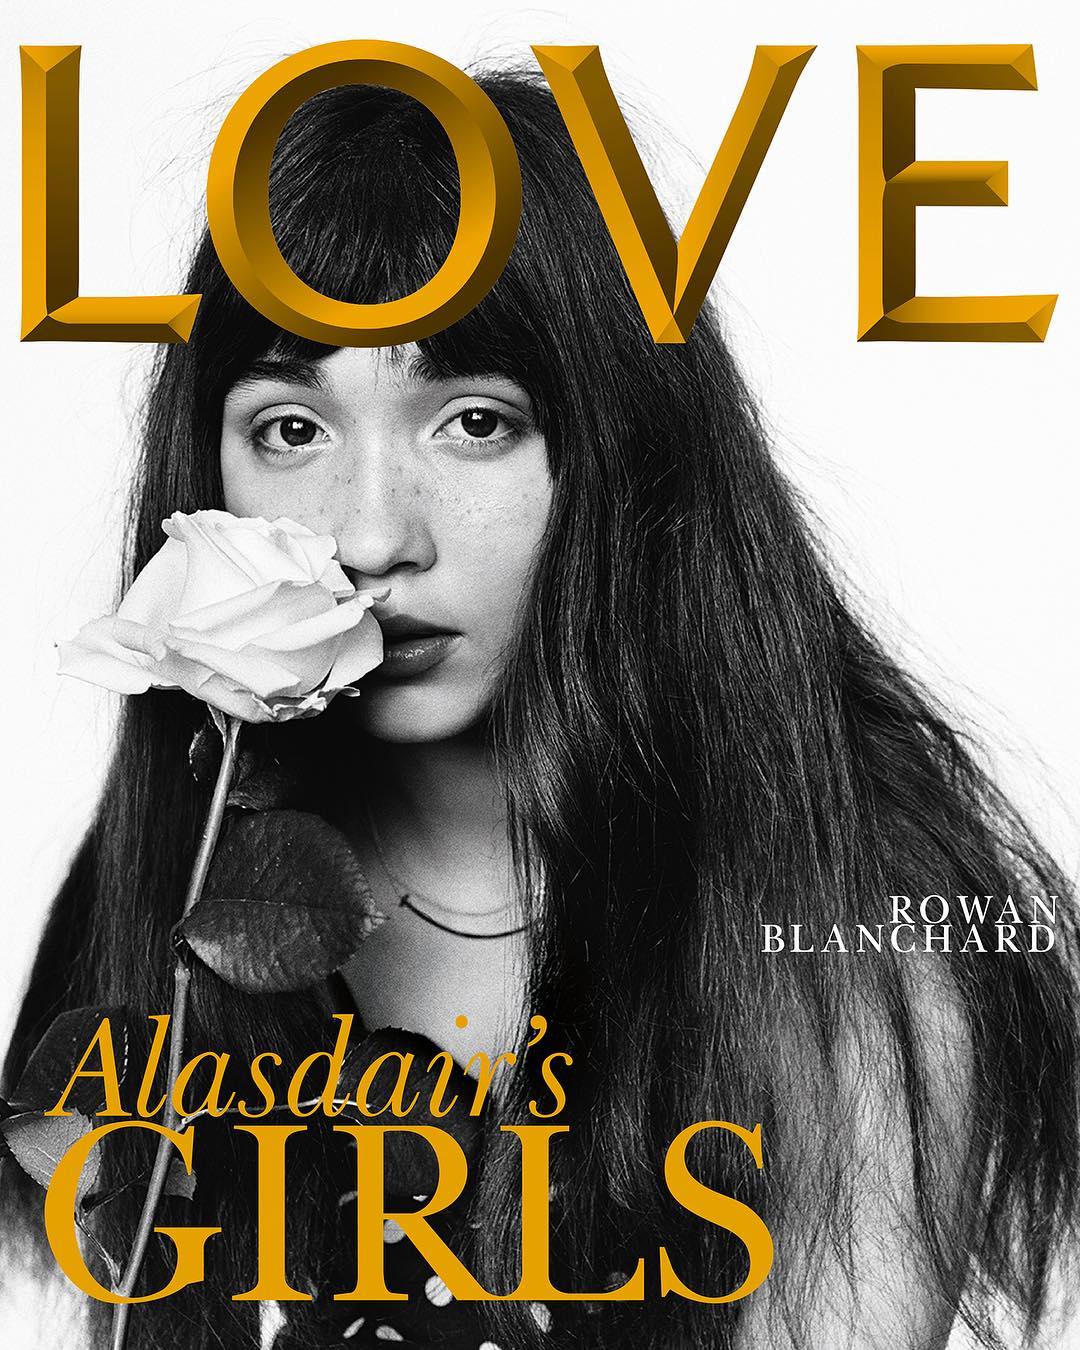 Issue love. Журнал Love. Love Magazine журнал. Love Magazine Covers. Lovely Magazine журнал.